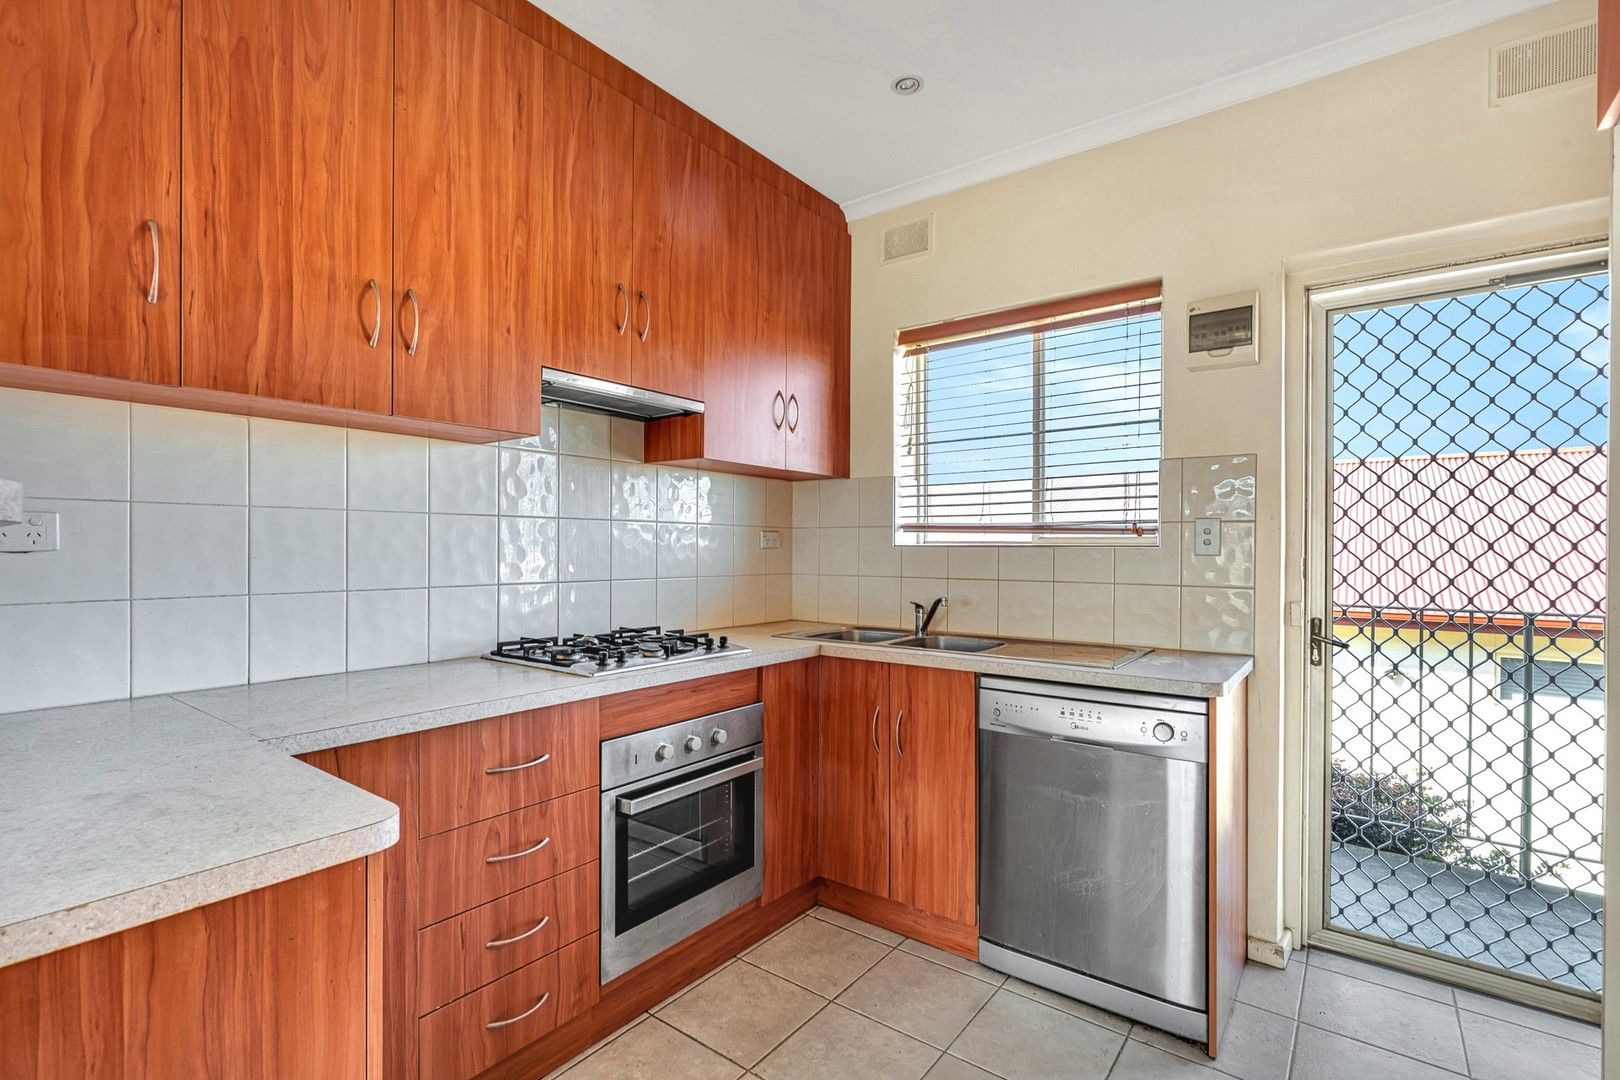 2 bedrooms Apartment / Unit / Flat in 5/94 Glyde Street ALBERT PARK SA, 5014